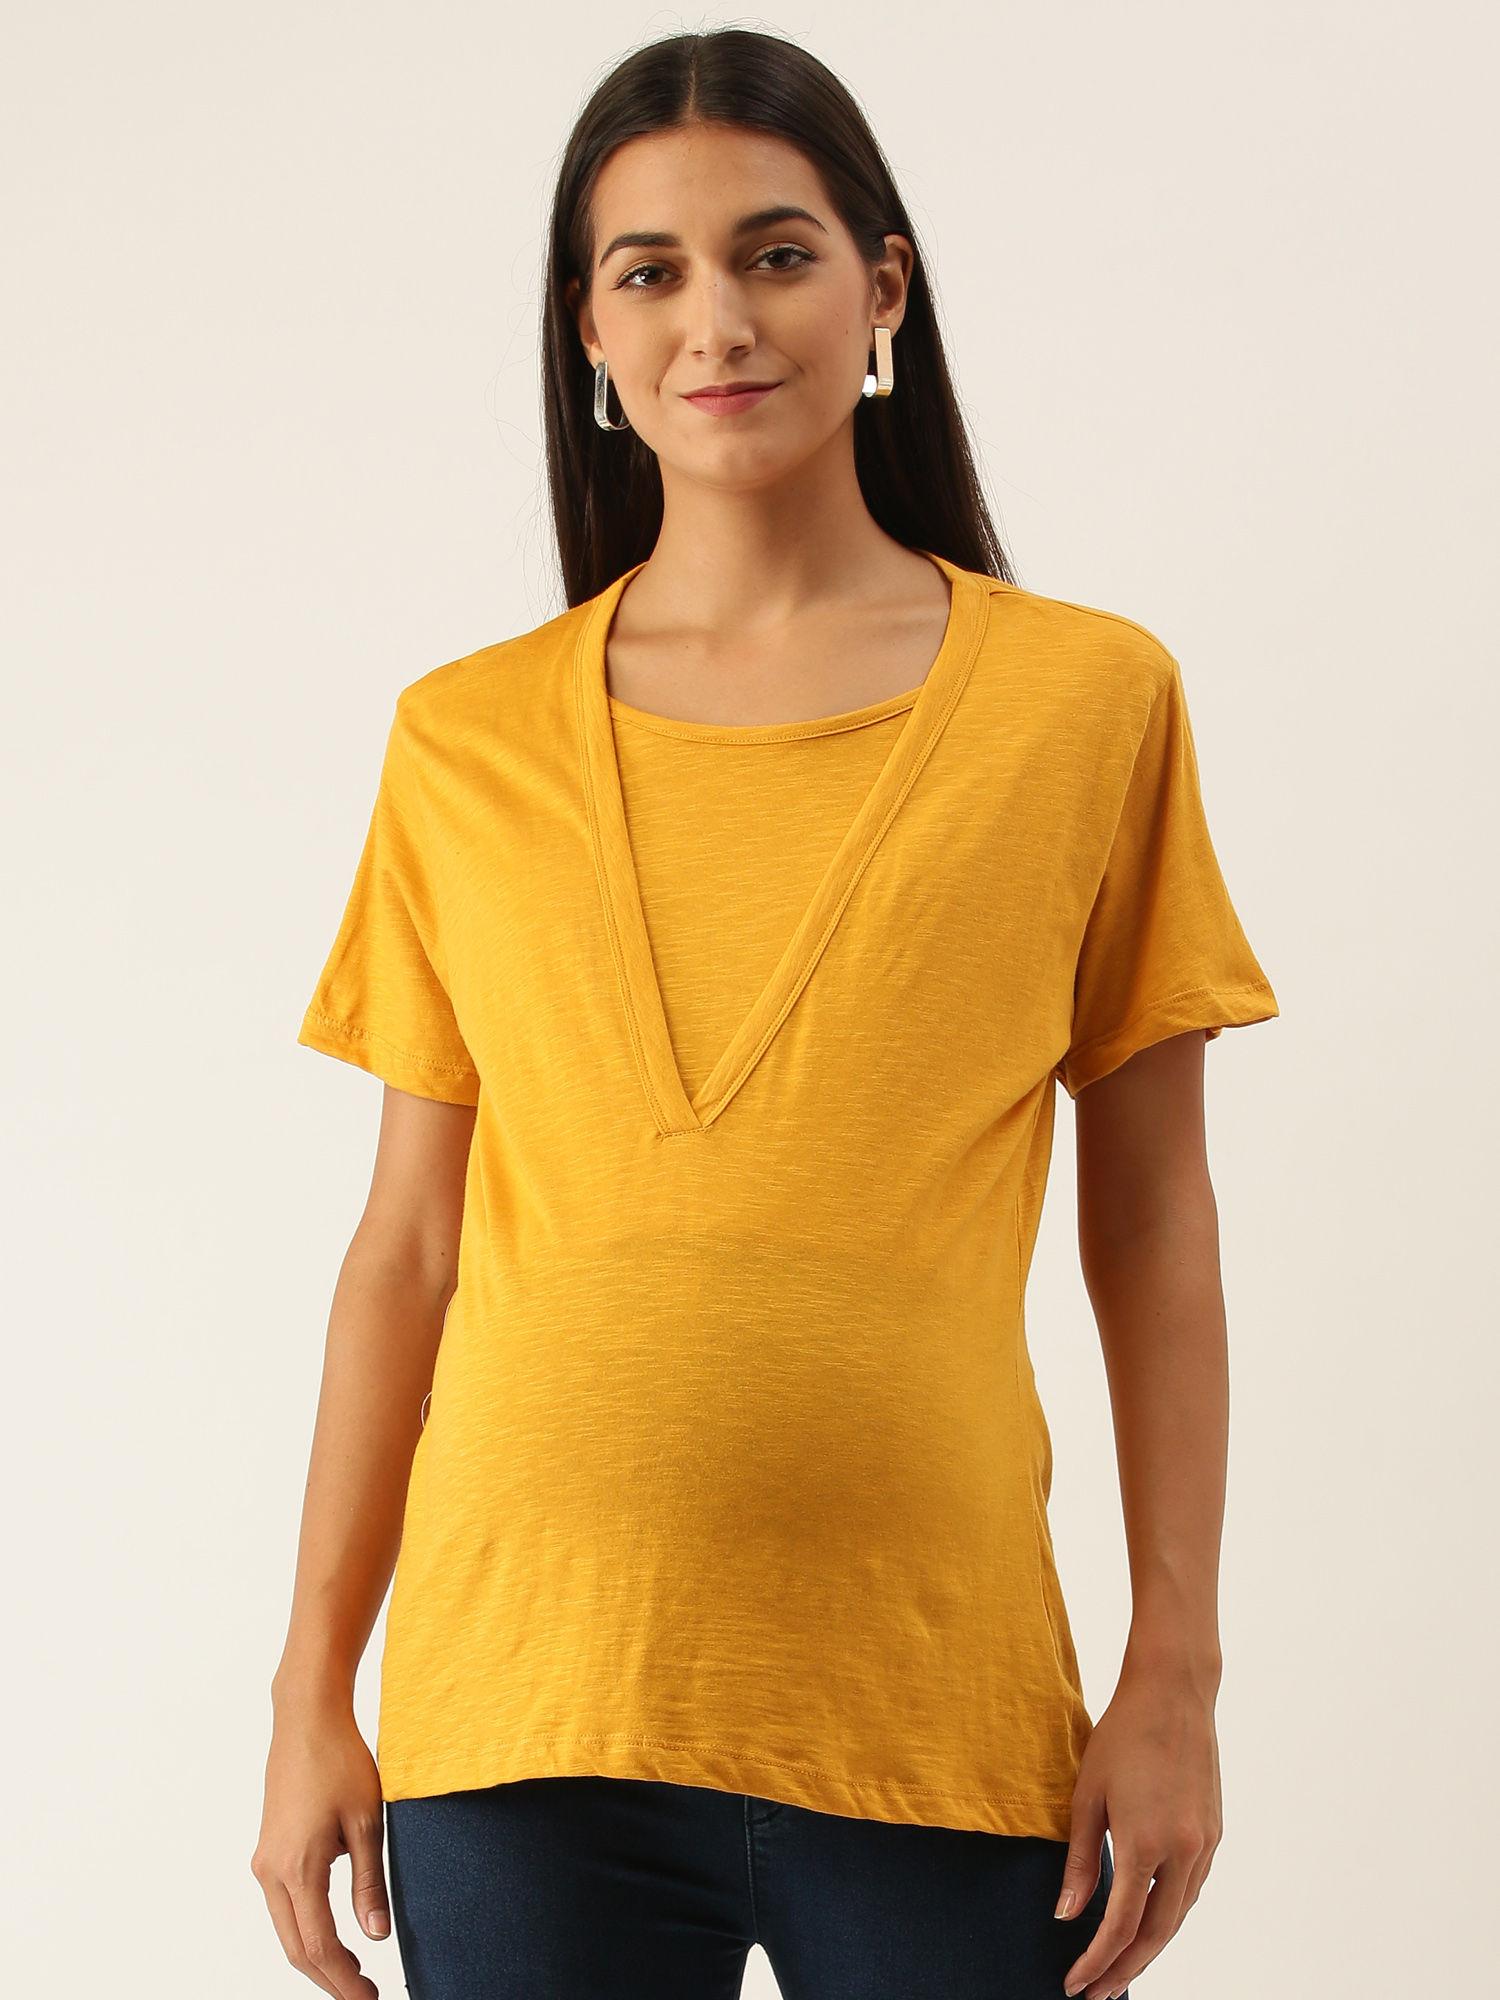 feeding/nursing maternity sleep top - yellow